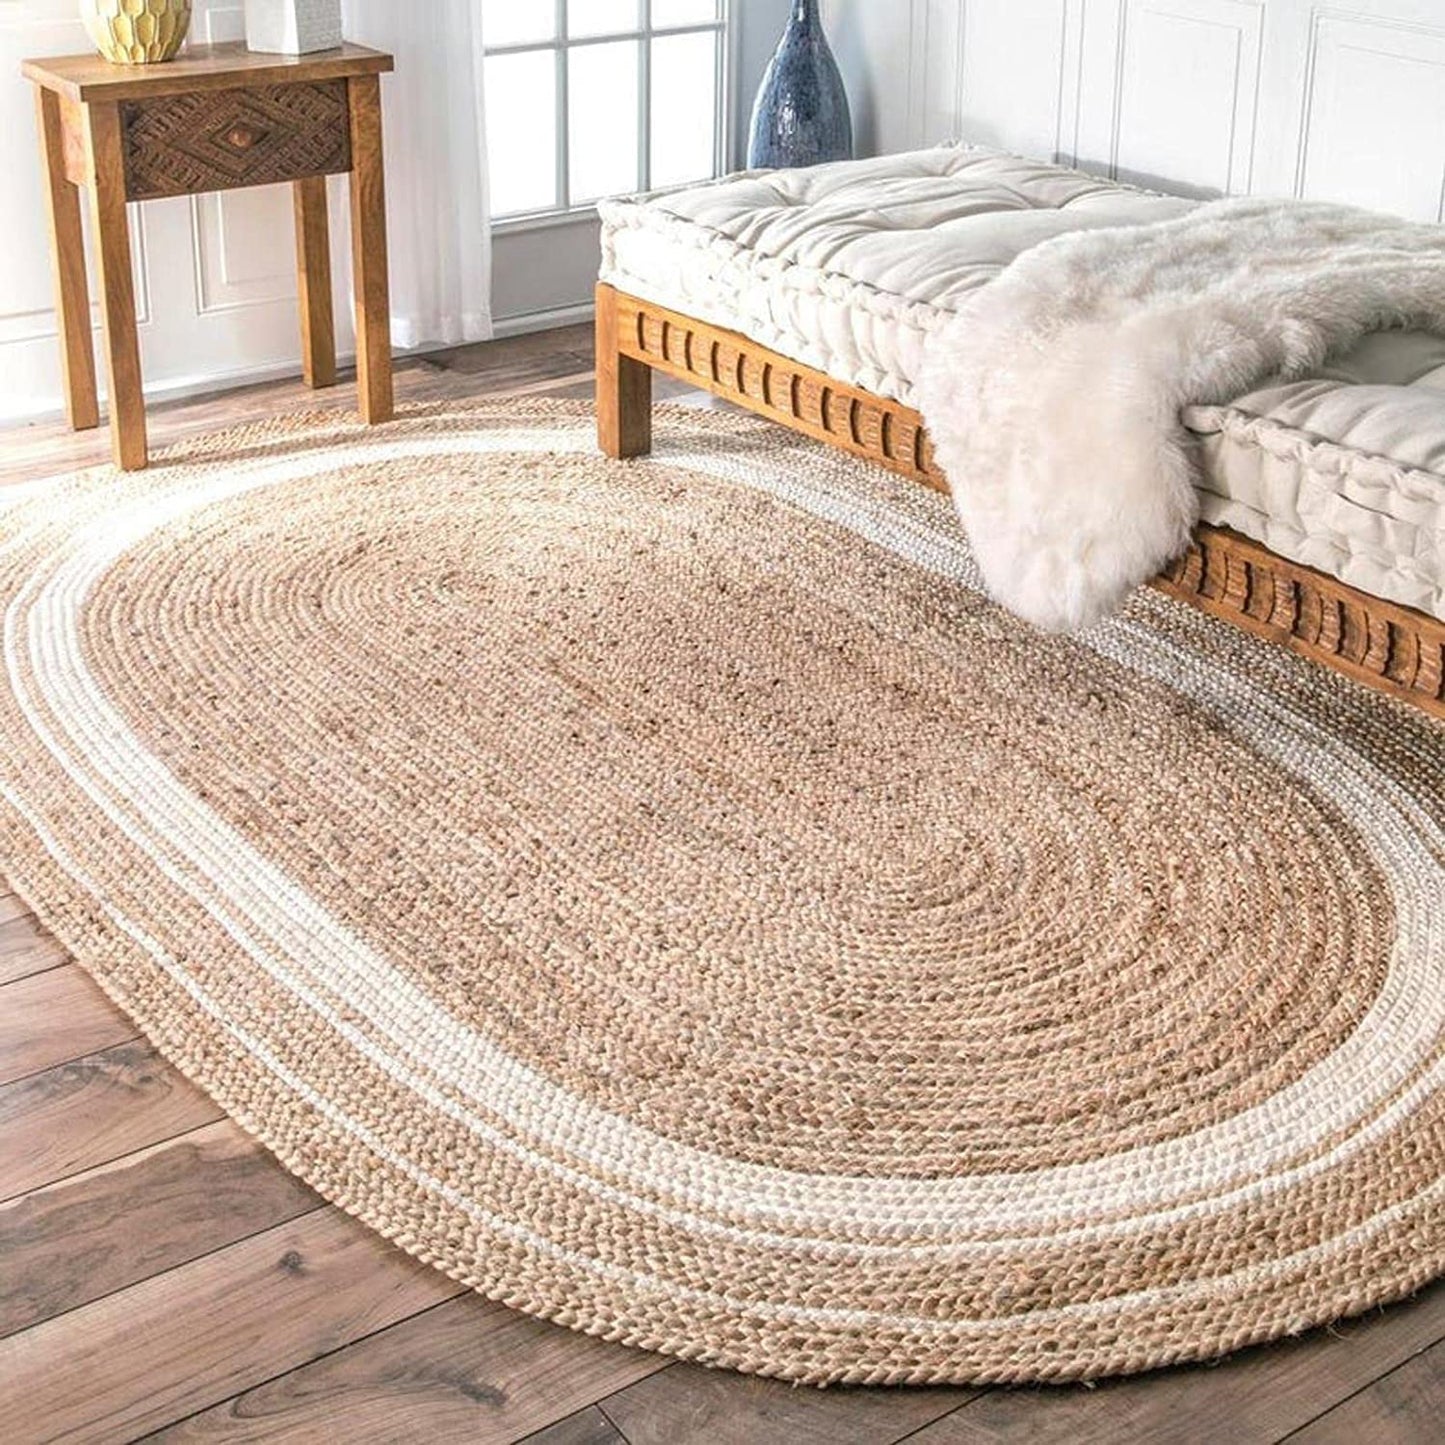 White Oval Carpets for living room